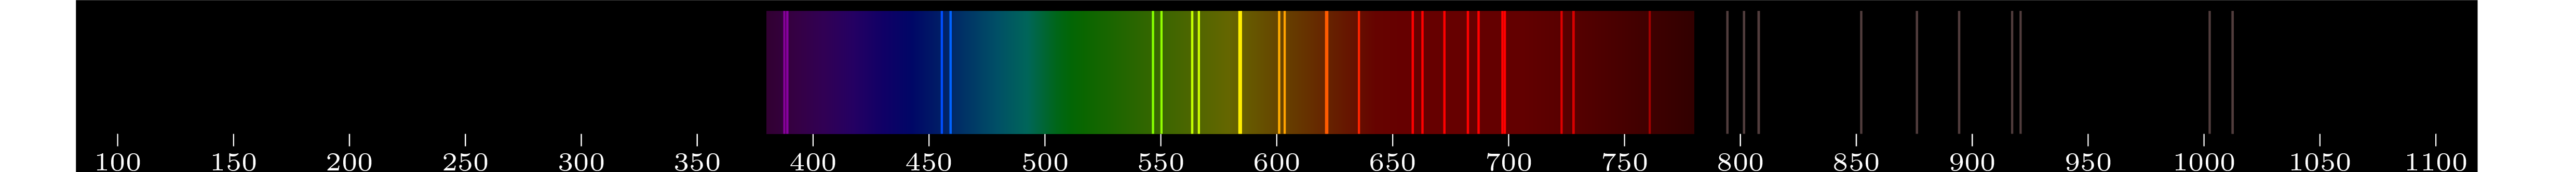 emmision spectra of element Cs